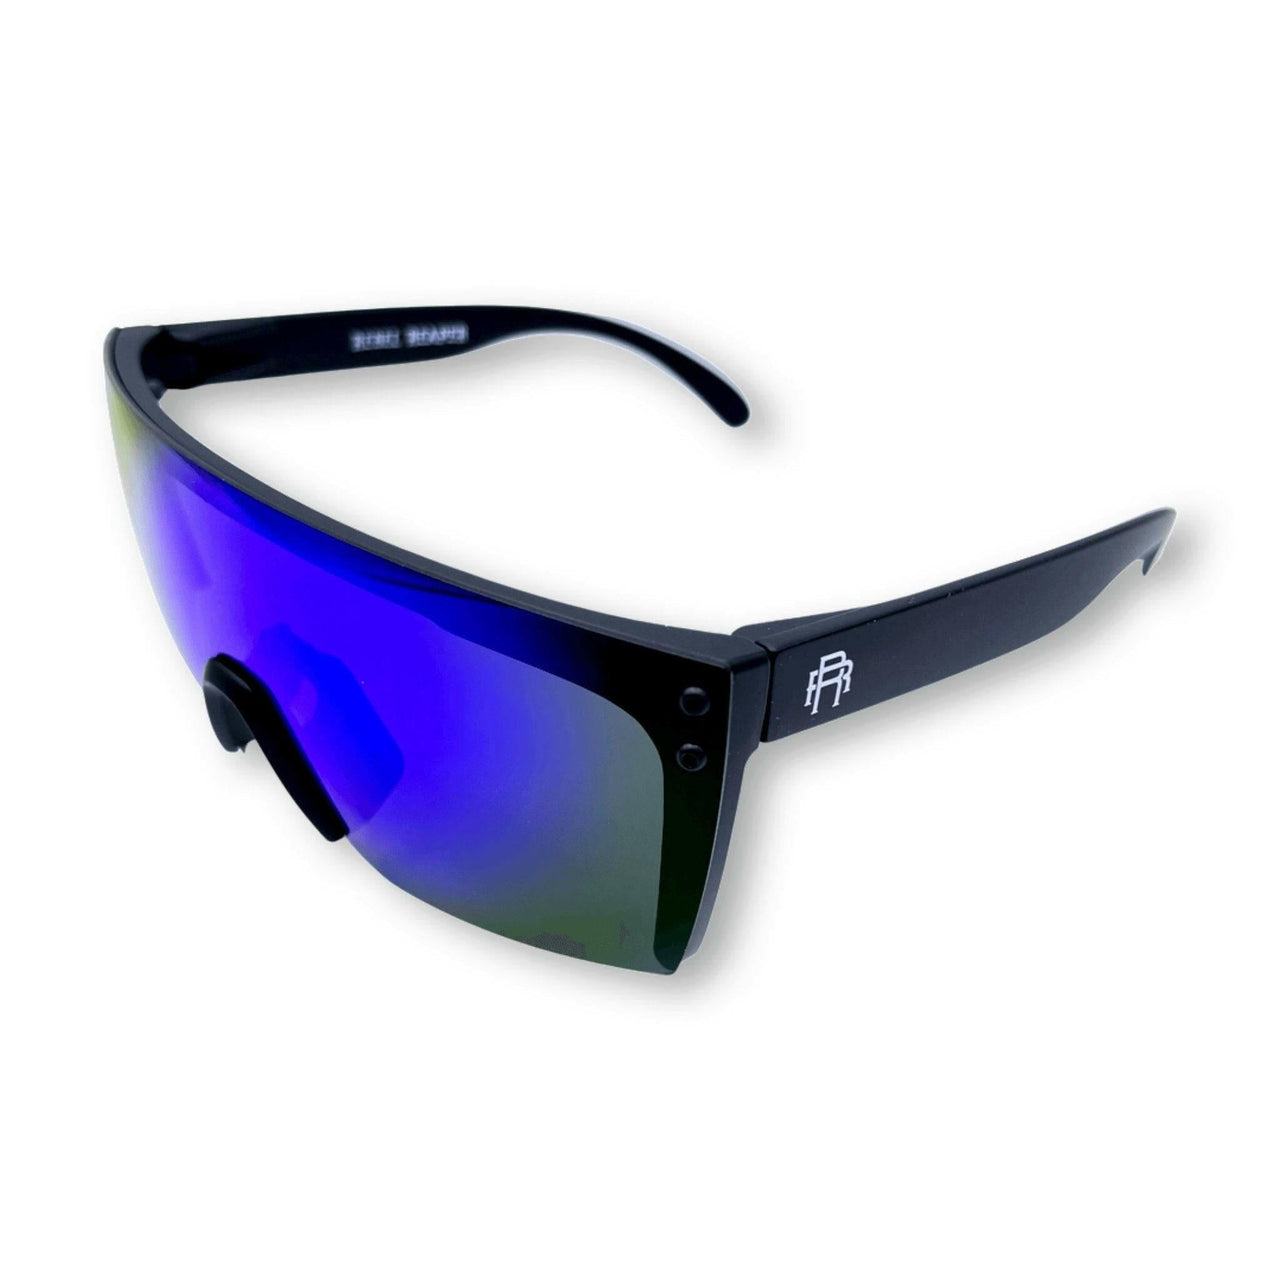 Hogans Purple Mirror Polarized Lens Sunglasses - Rebel Reaper Clothing Company Sunglasses